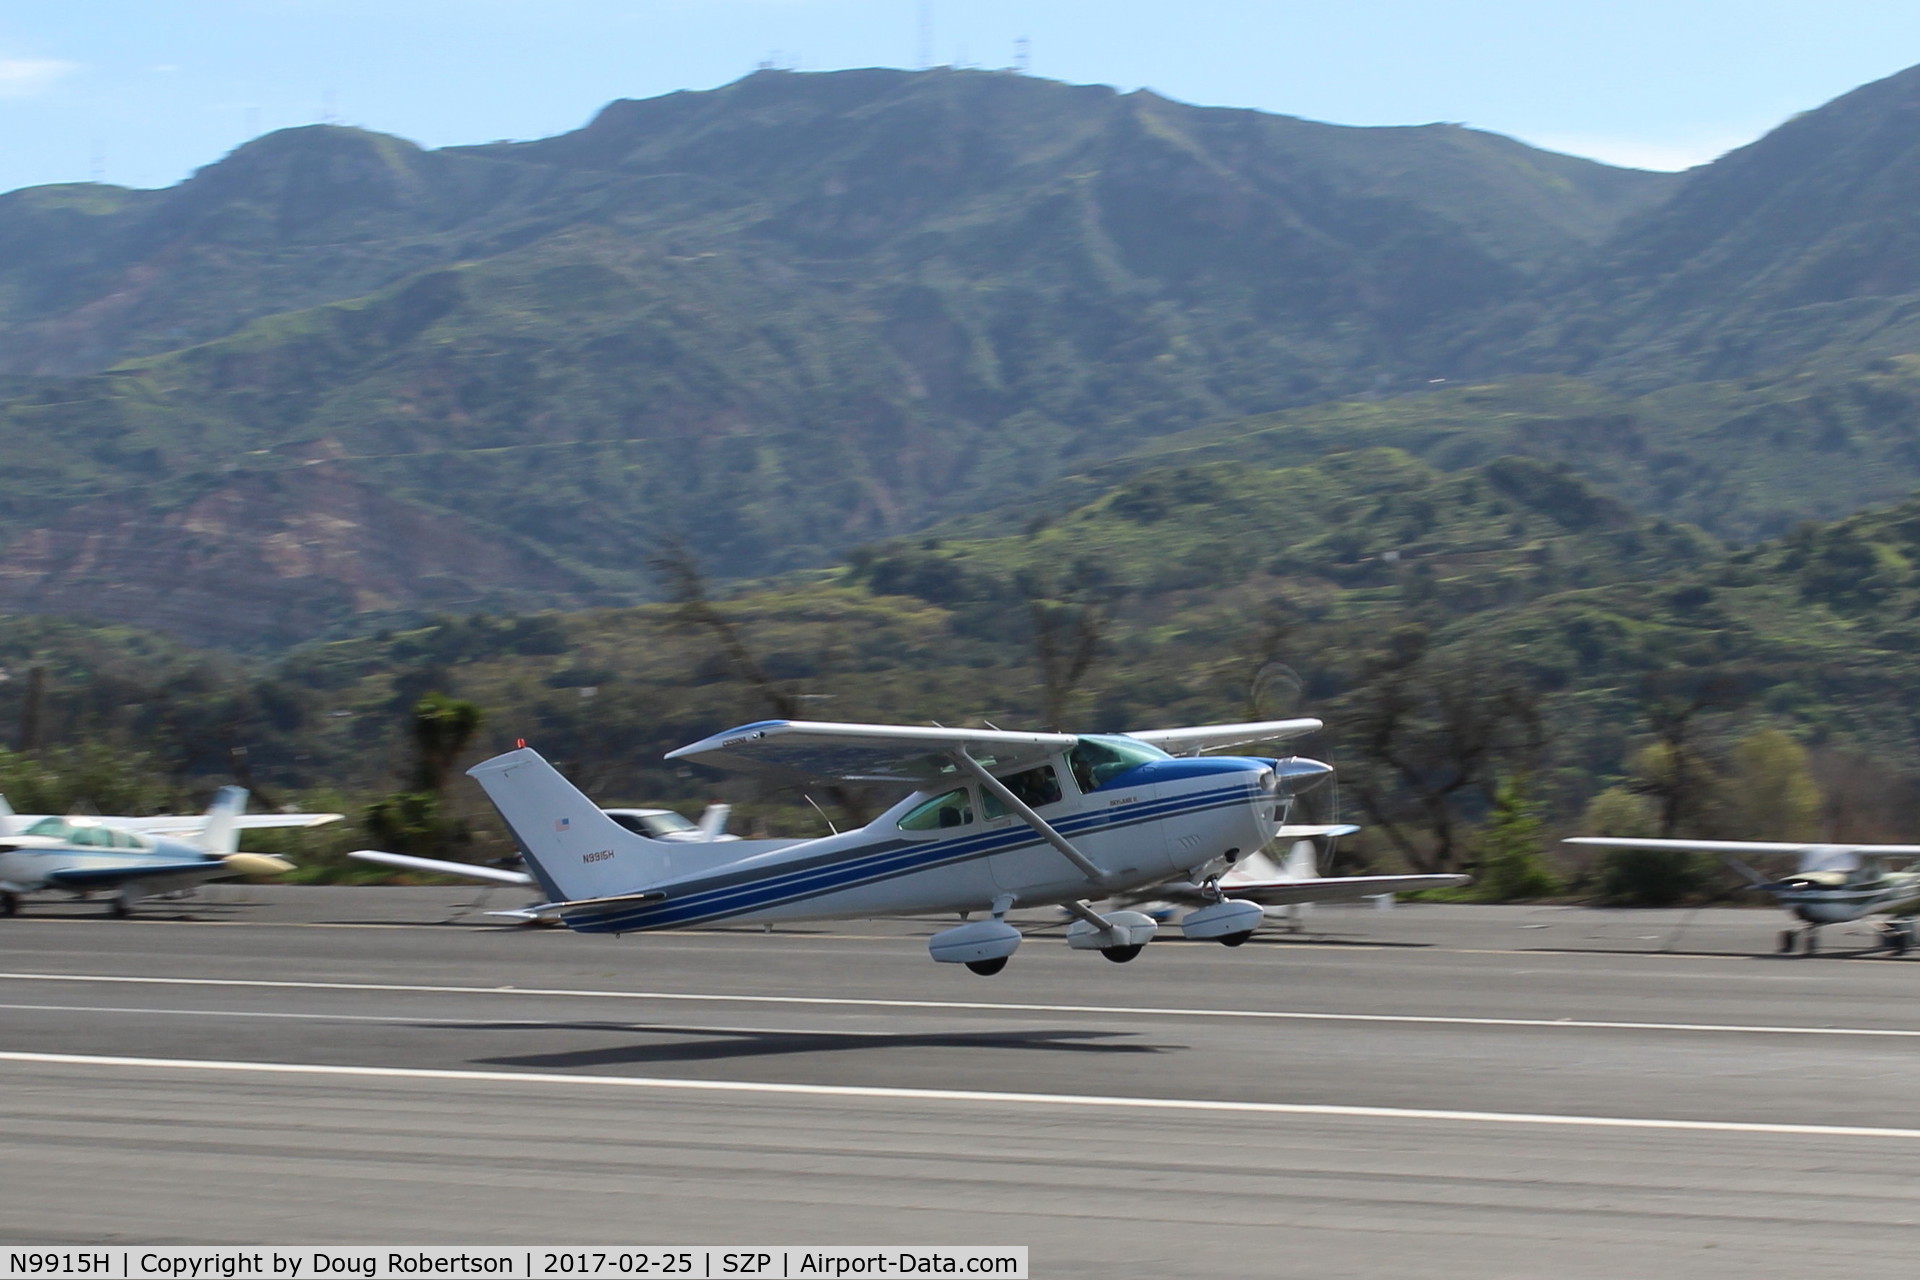 N9915H, 1981 Cessna 182R Skylane C/N 18268109, 1981 Cessna 182R SKYLANE, Continental 0-470-U 230 Hp, takeoff climb Rwy 22